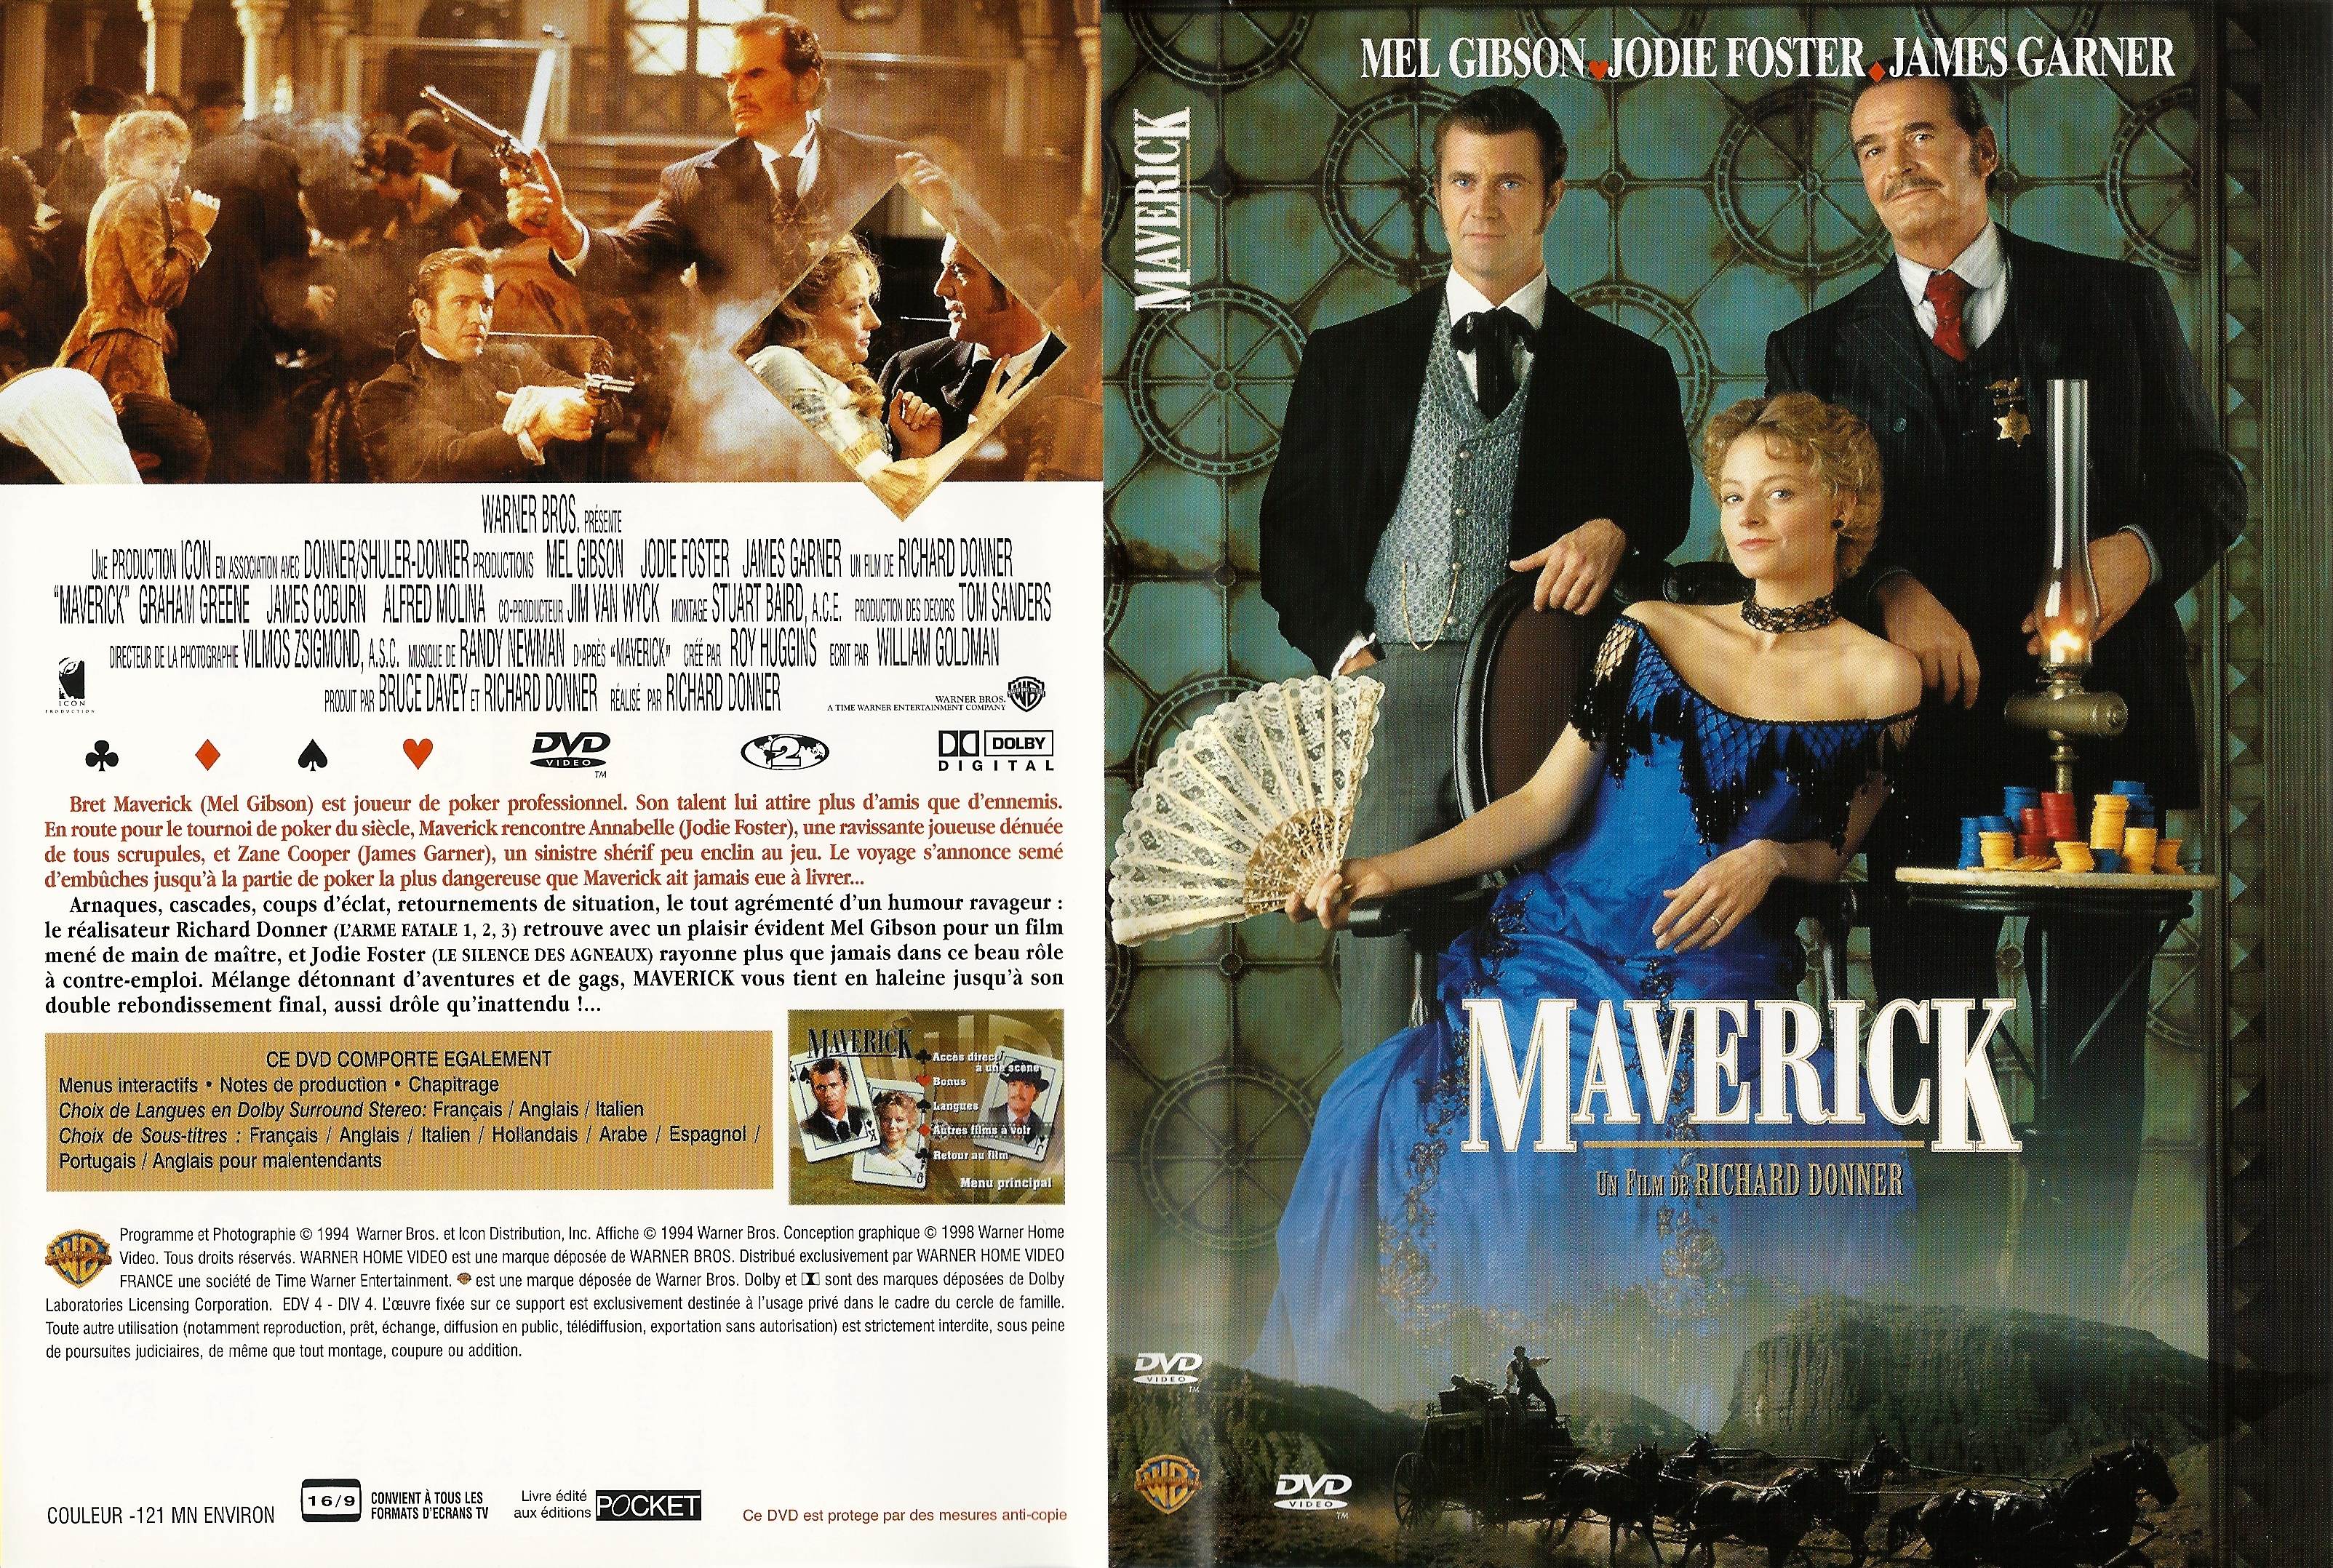 Jaquette DVD Maverick v2